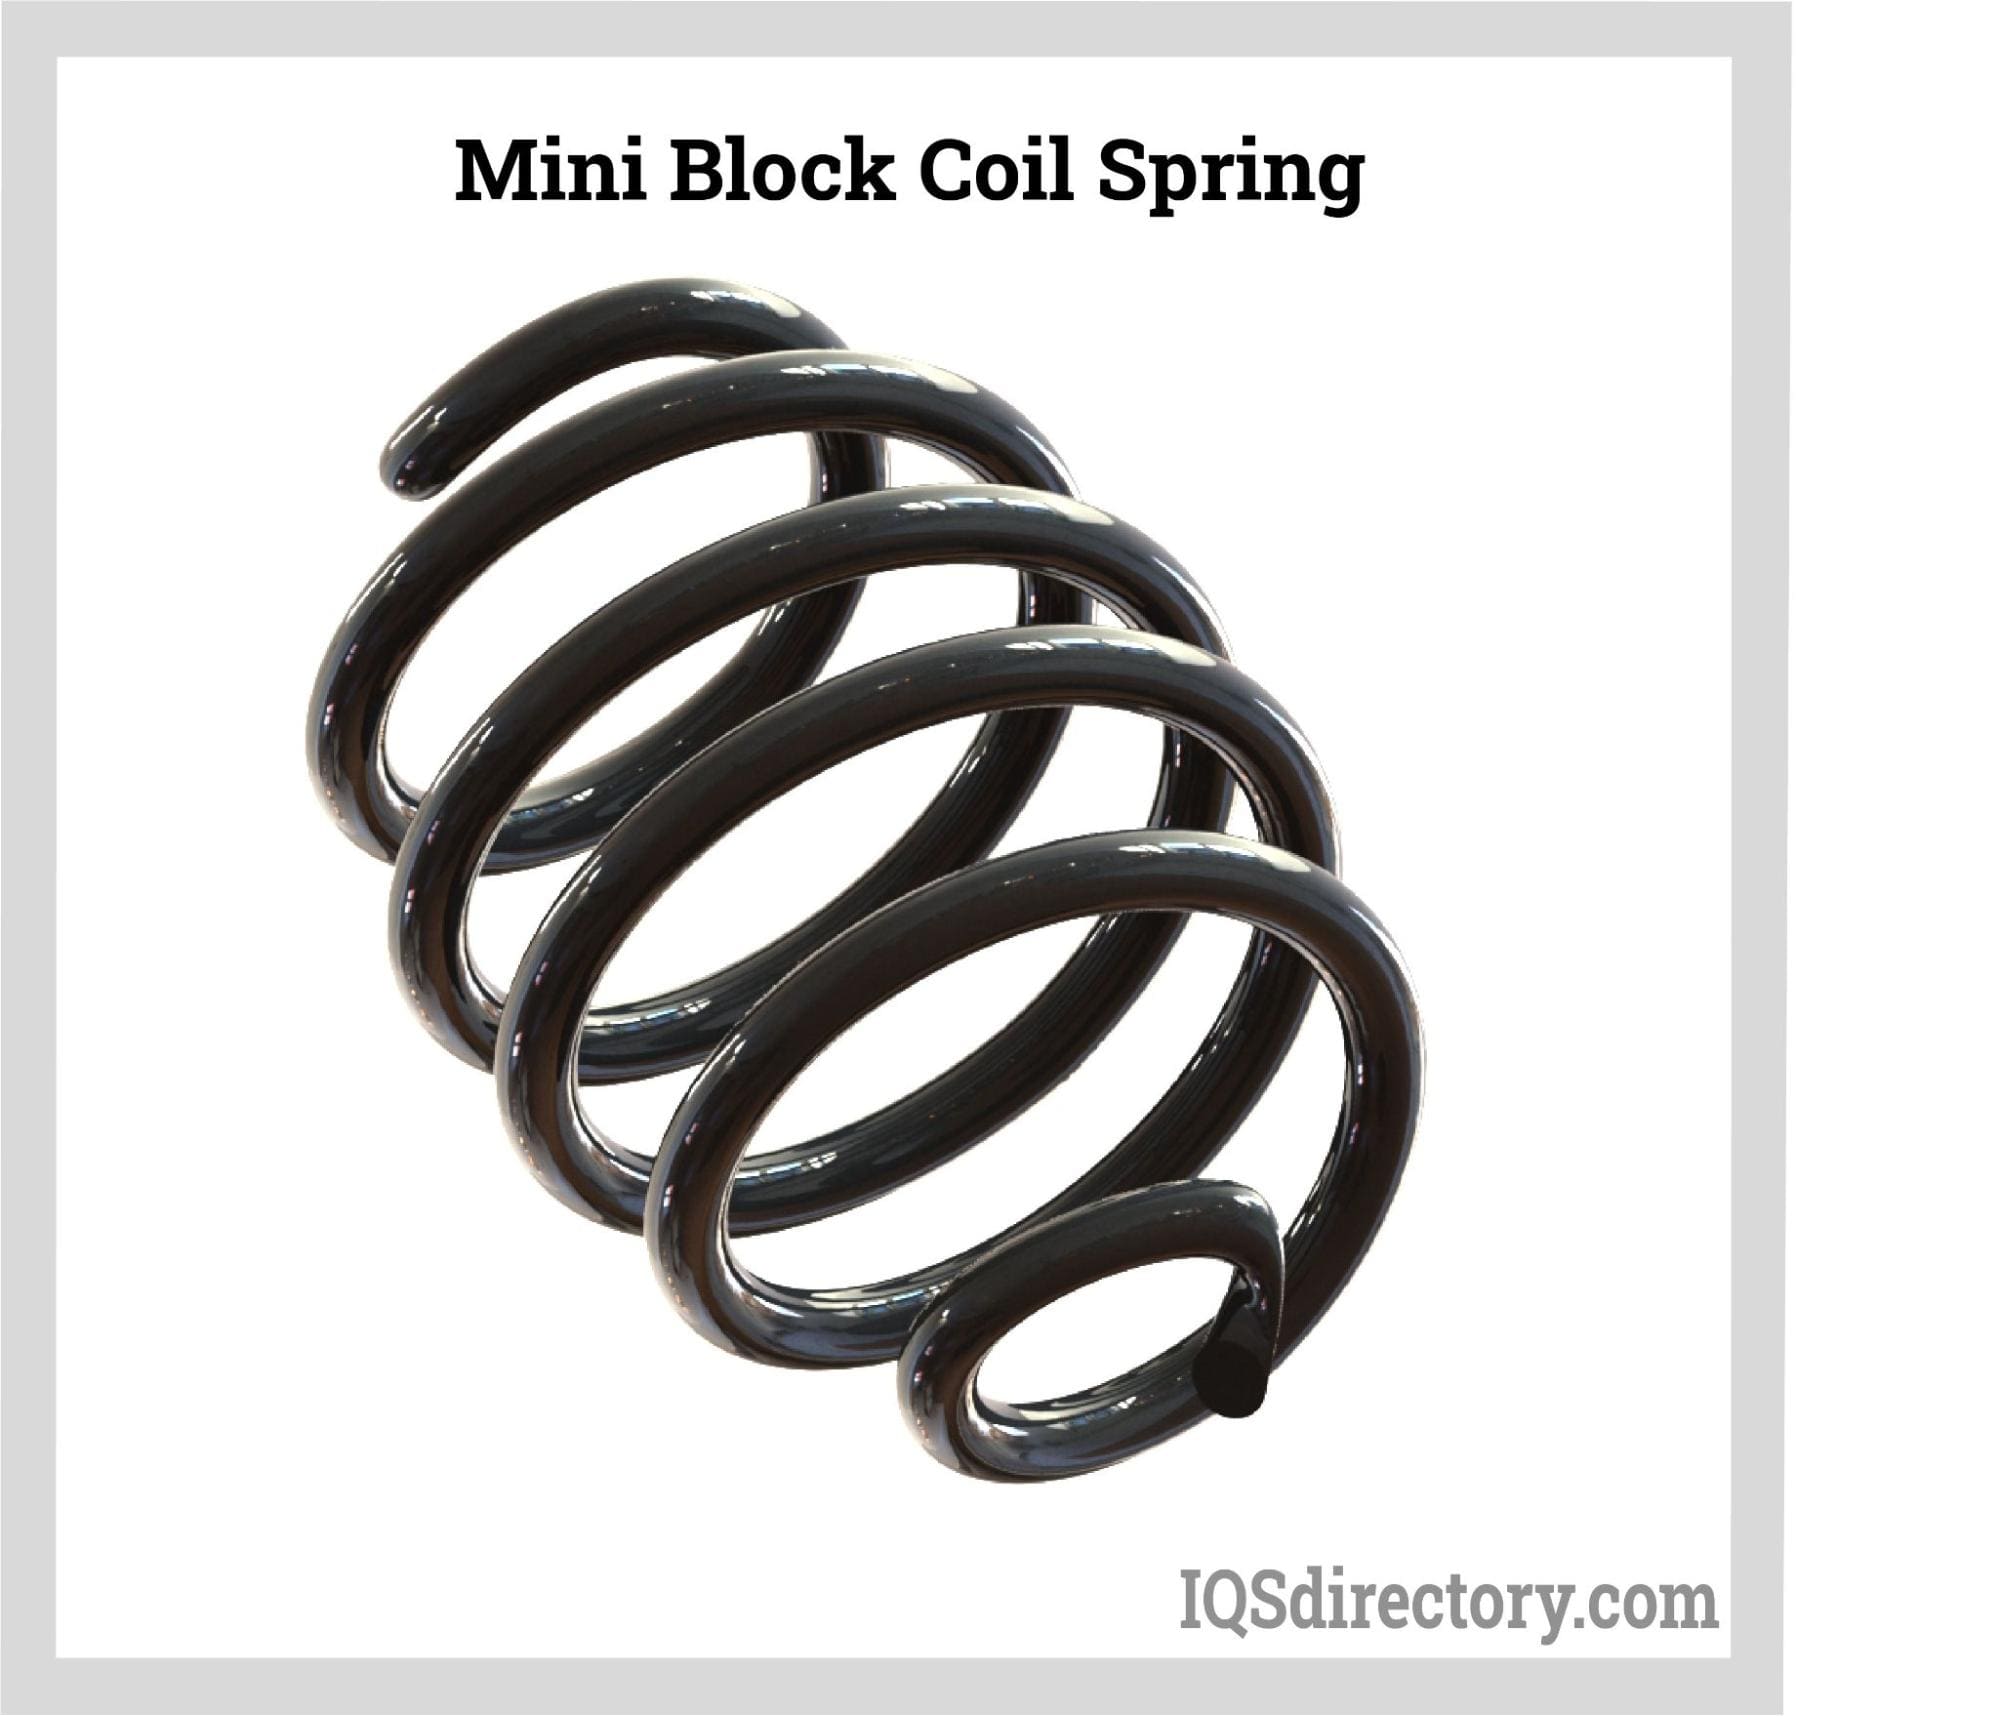 Mini Block Coil Spring